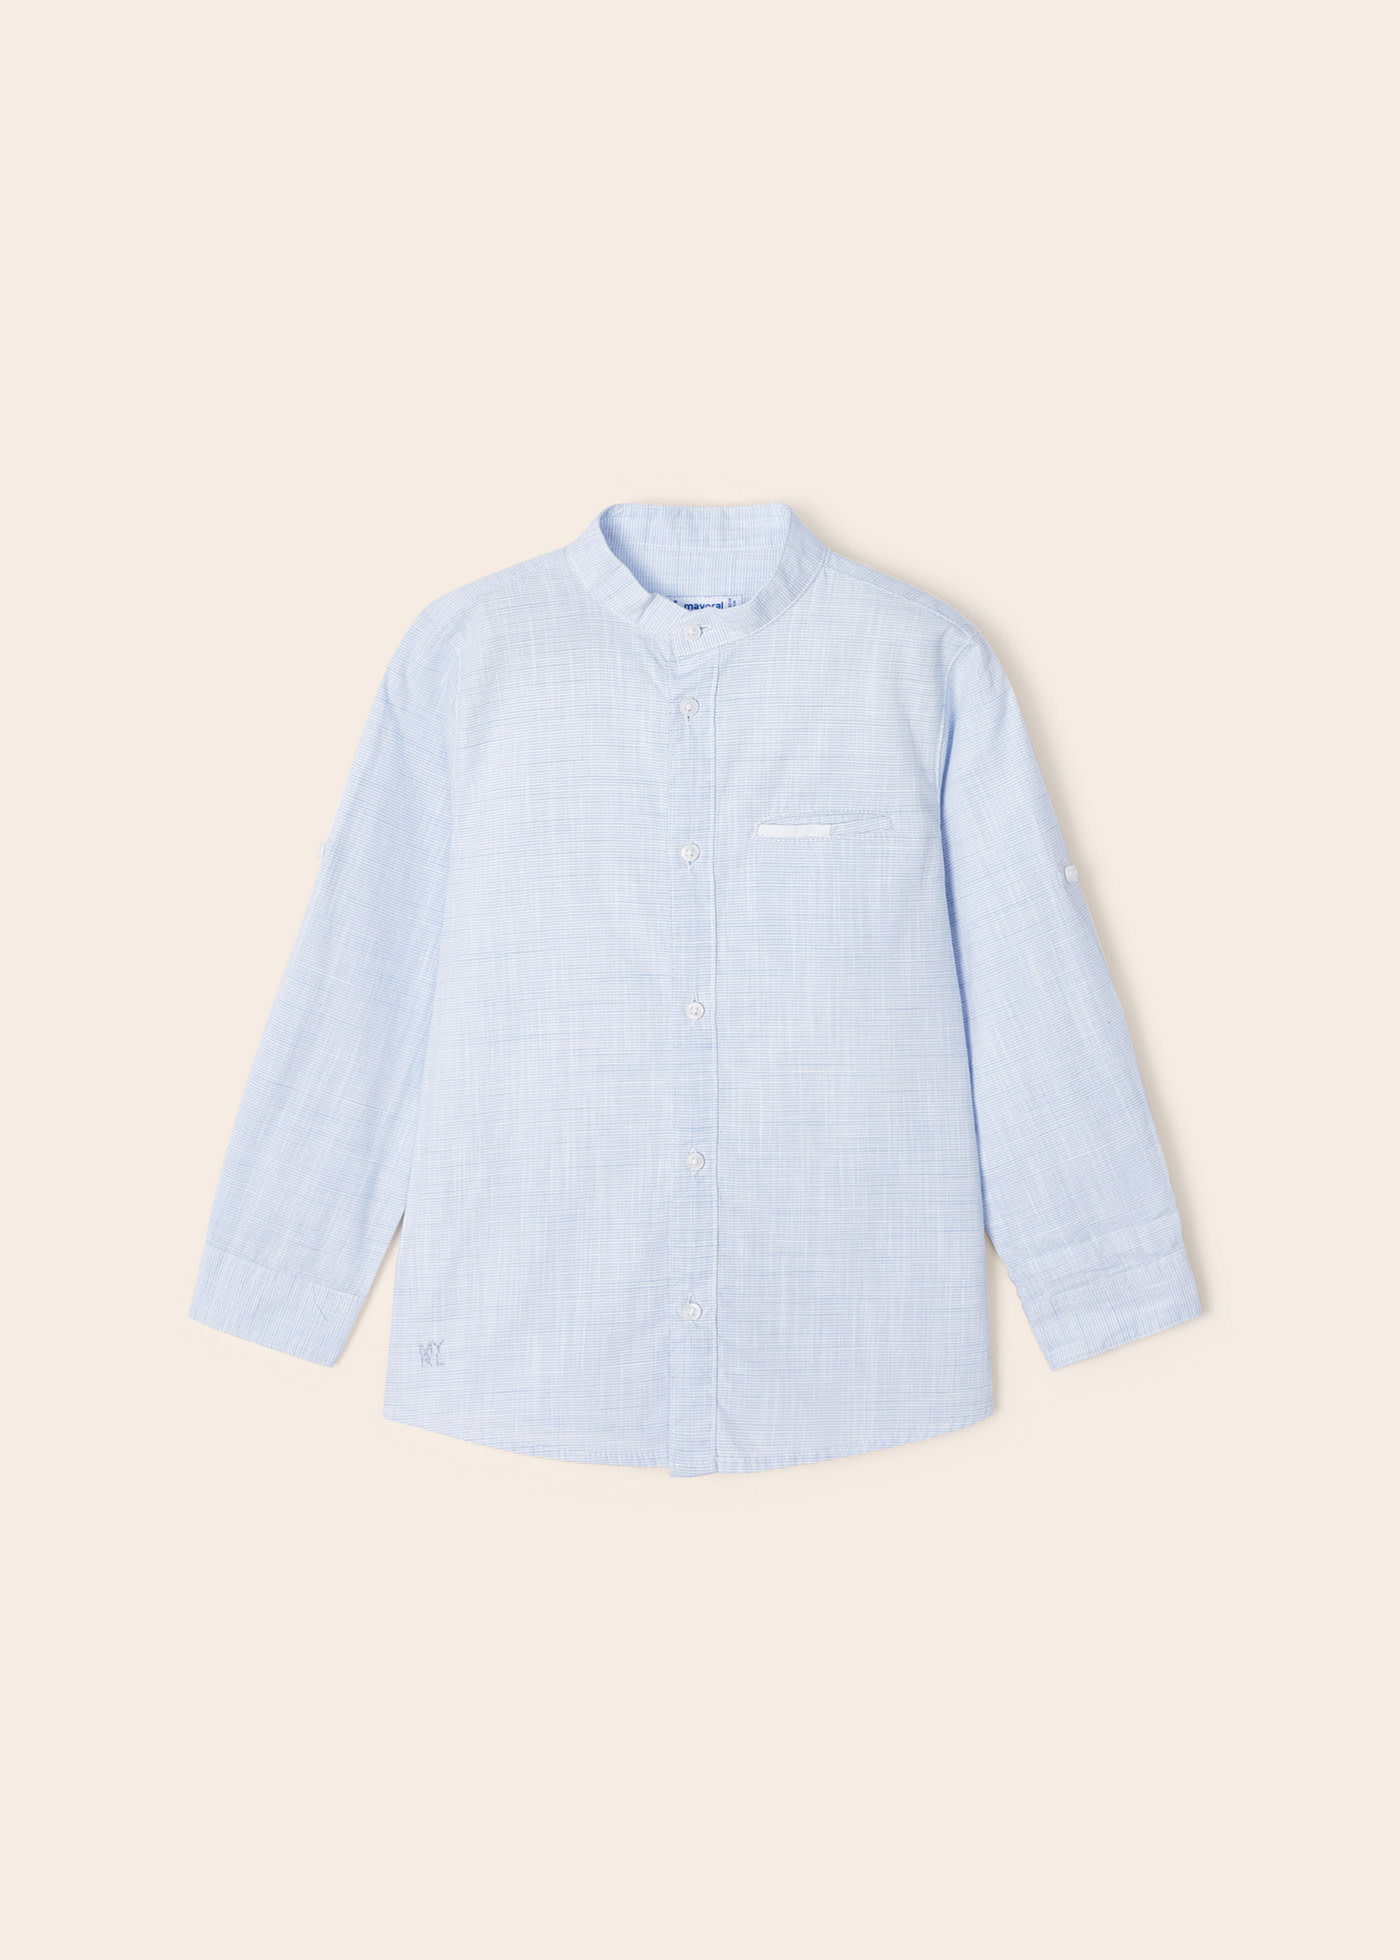 Shirt in Linen/Cotton, Mandarin Collar, Long Sleeves, for Boys - white,  Boys